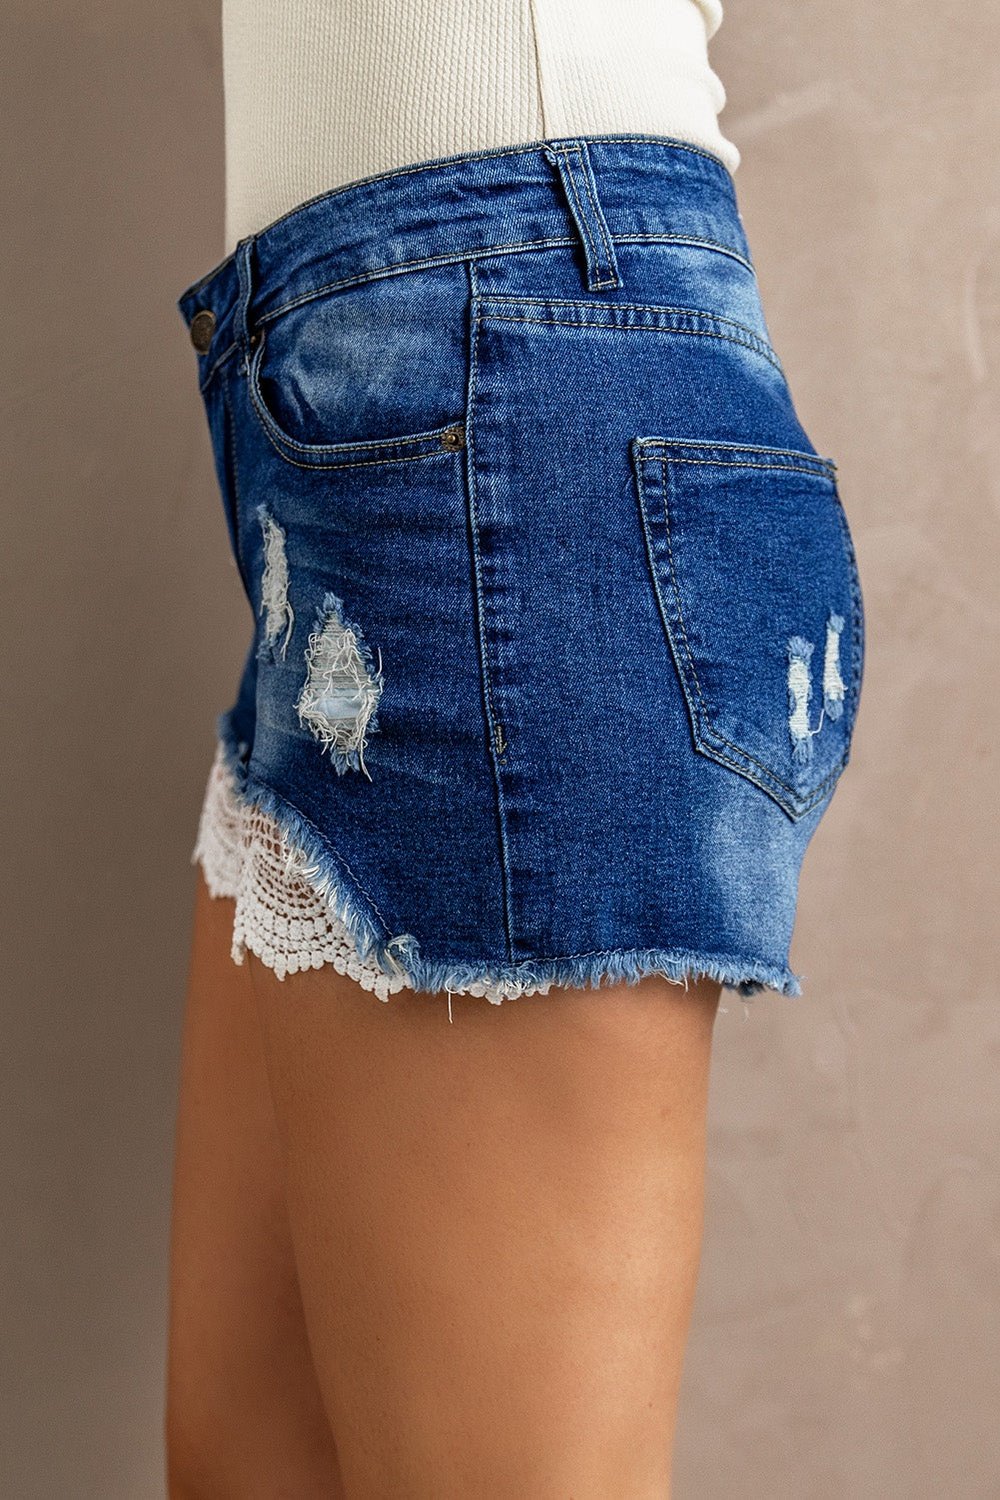 Spliced Lace Distressed Denim Shorts - Denim Shorts - FITGGINS